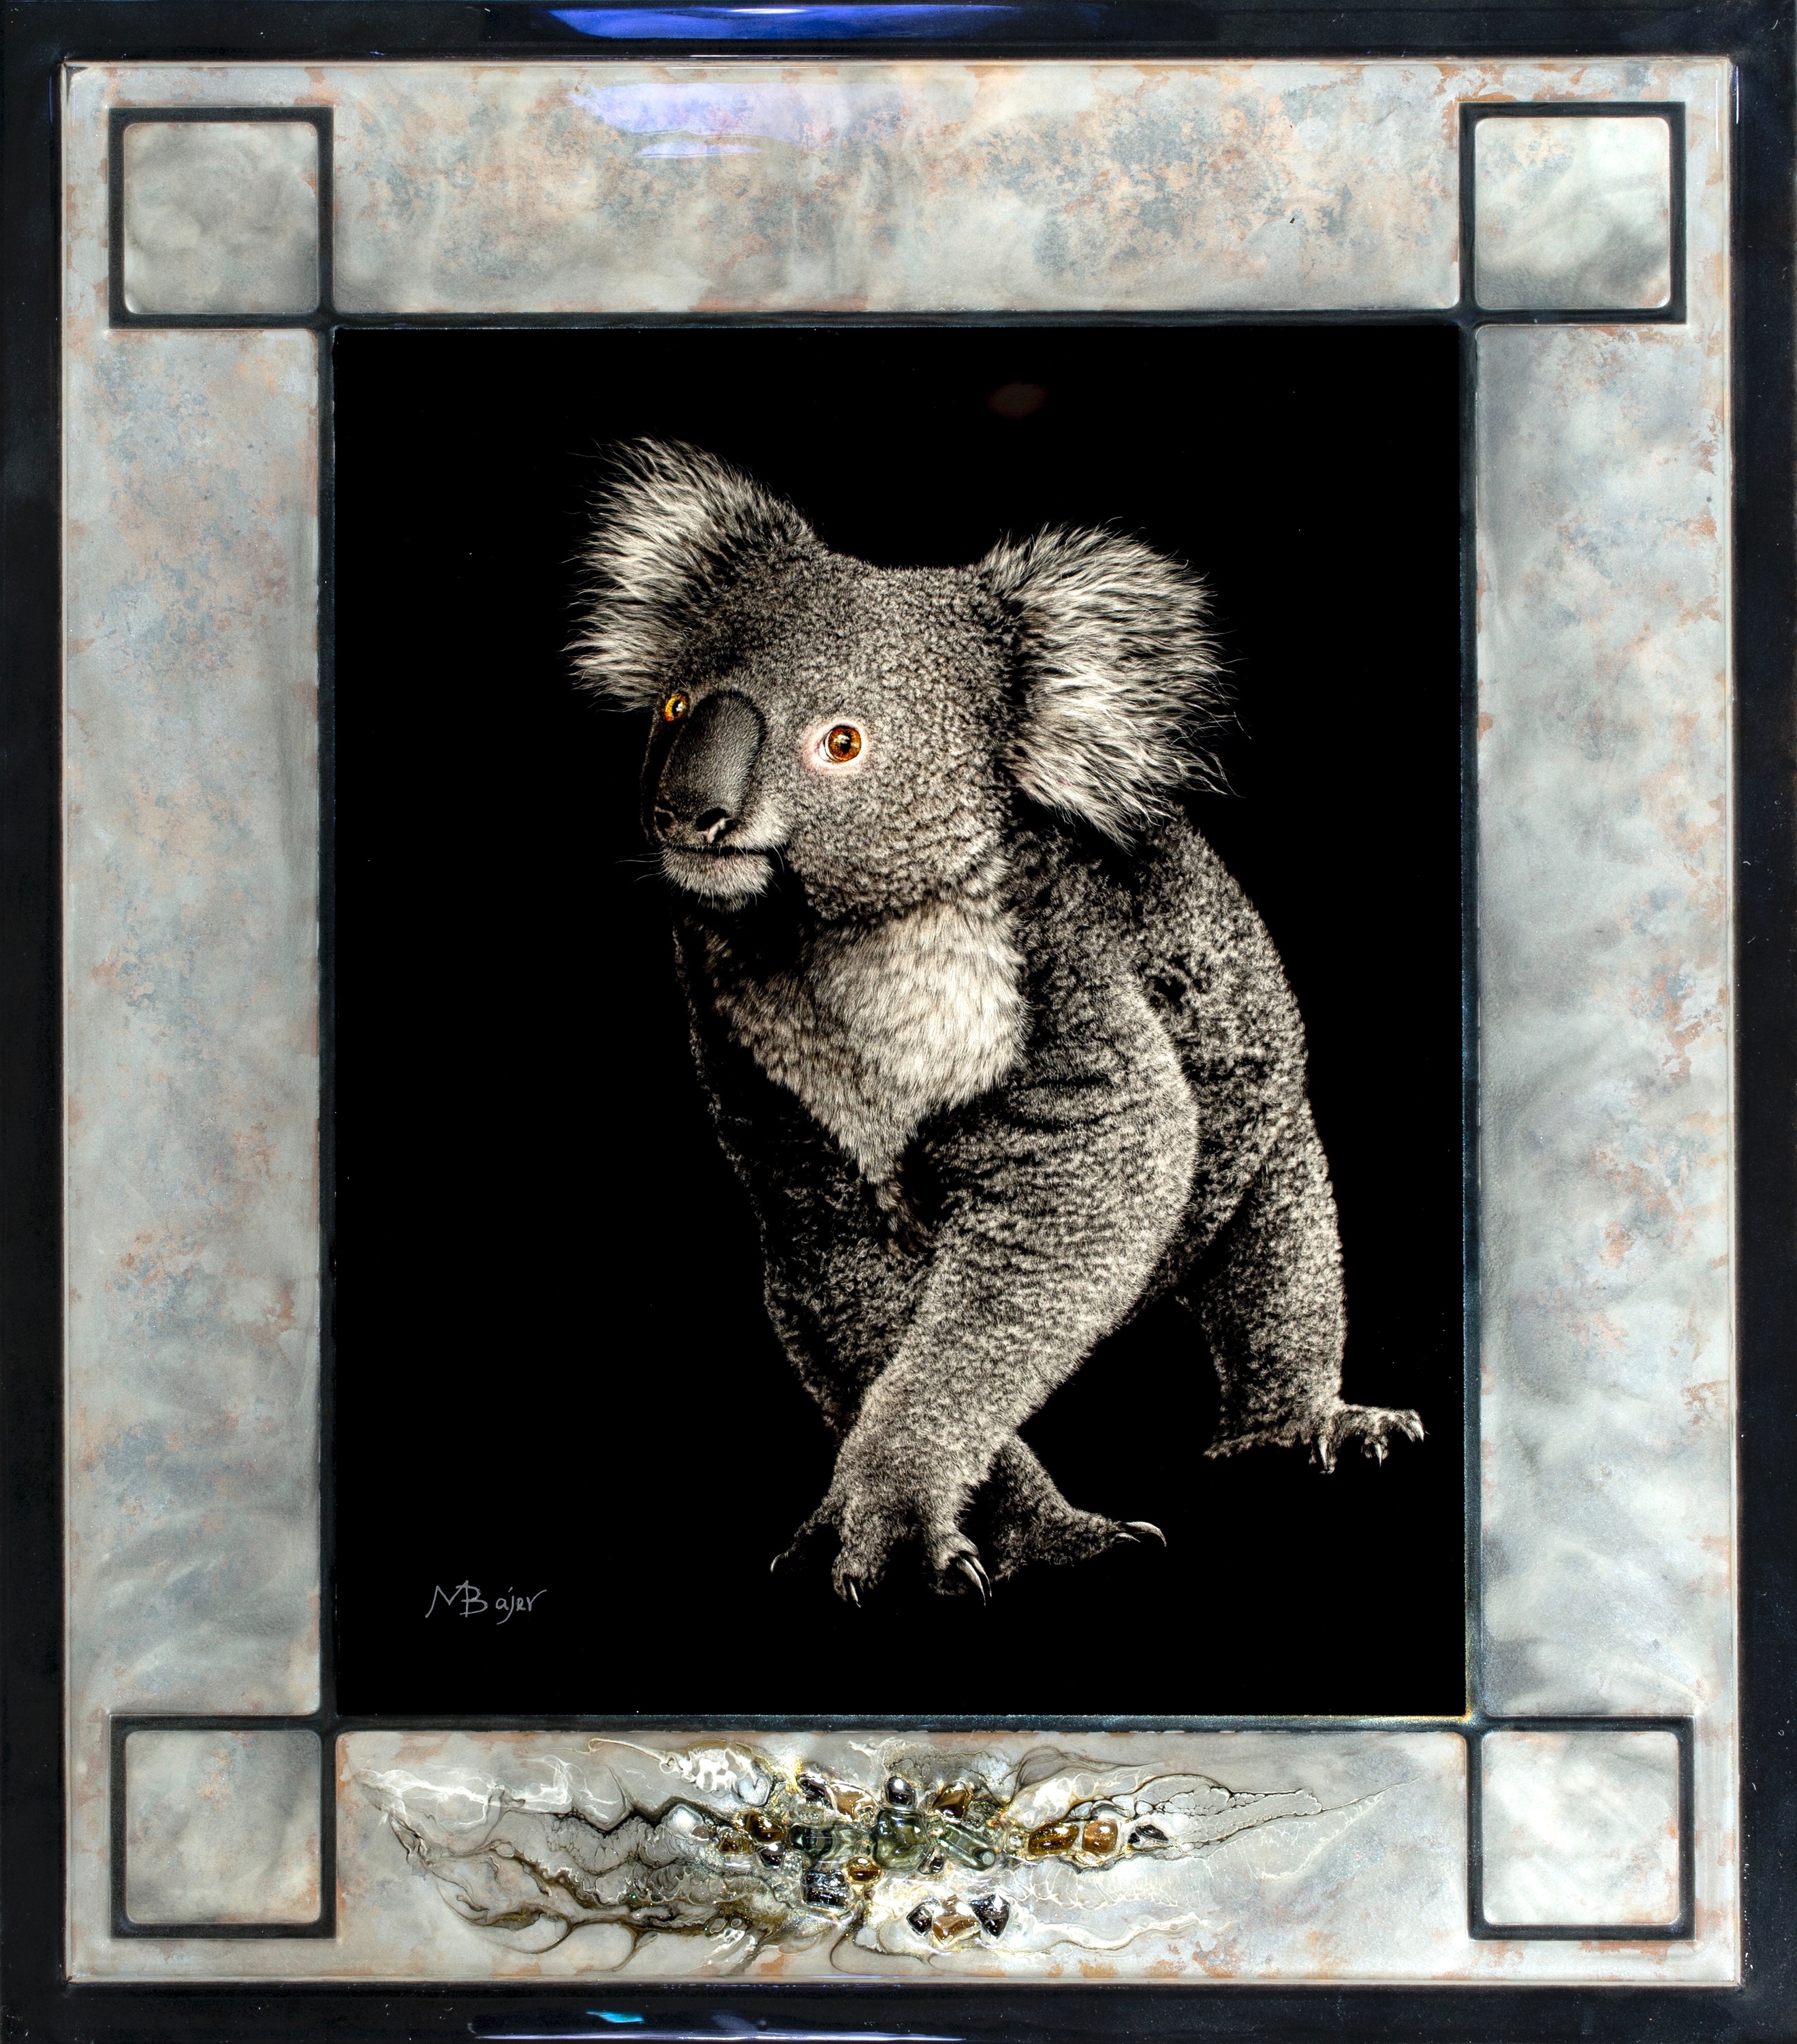 The koala with frame y5inuk